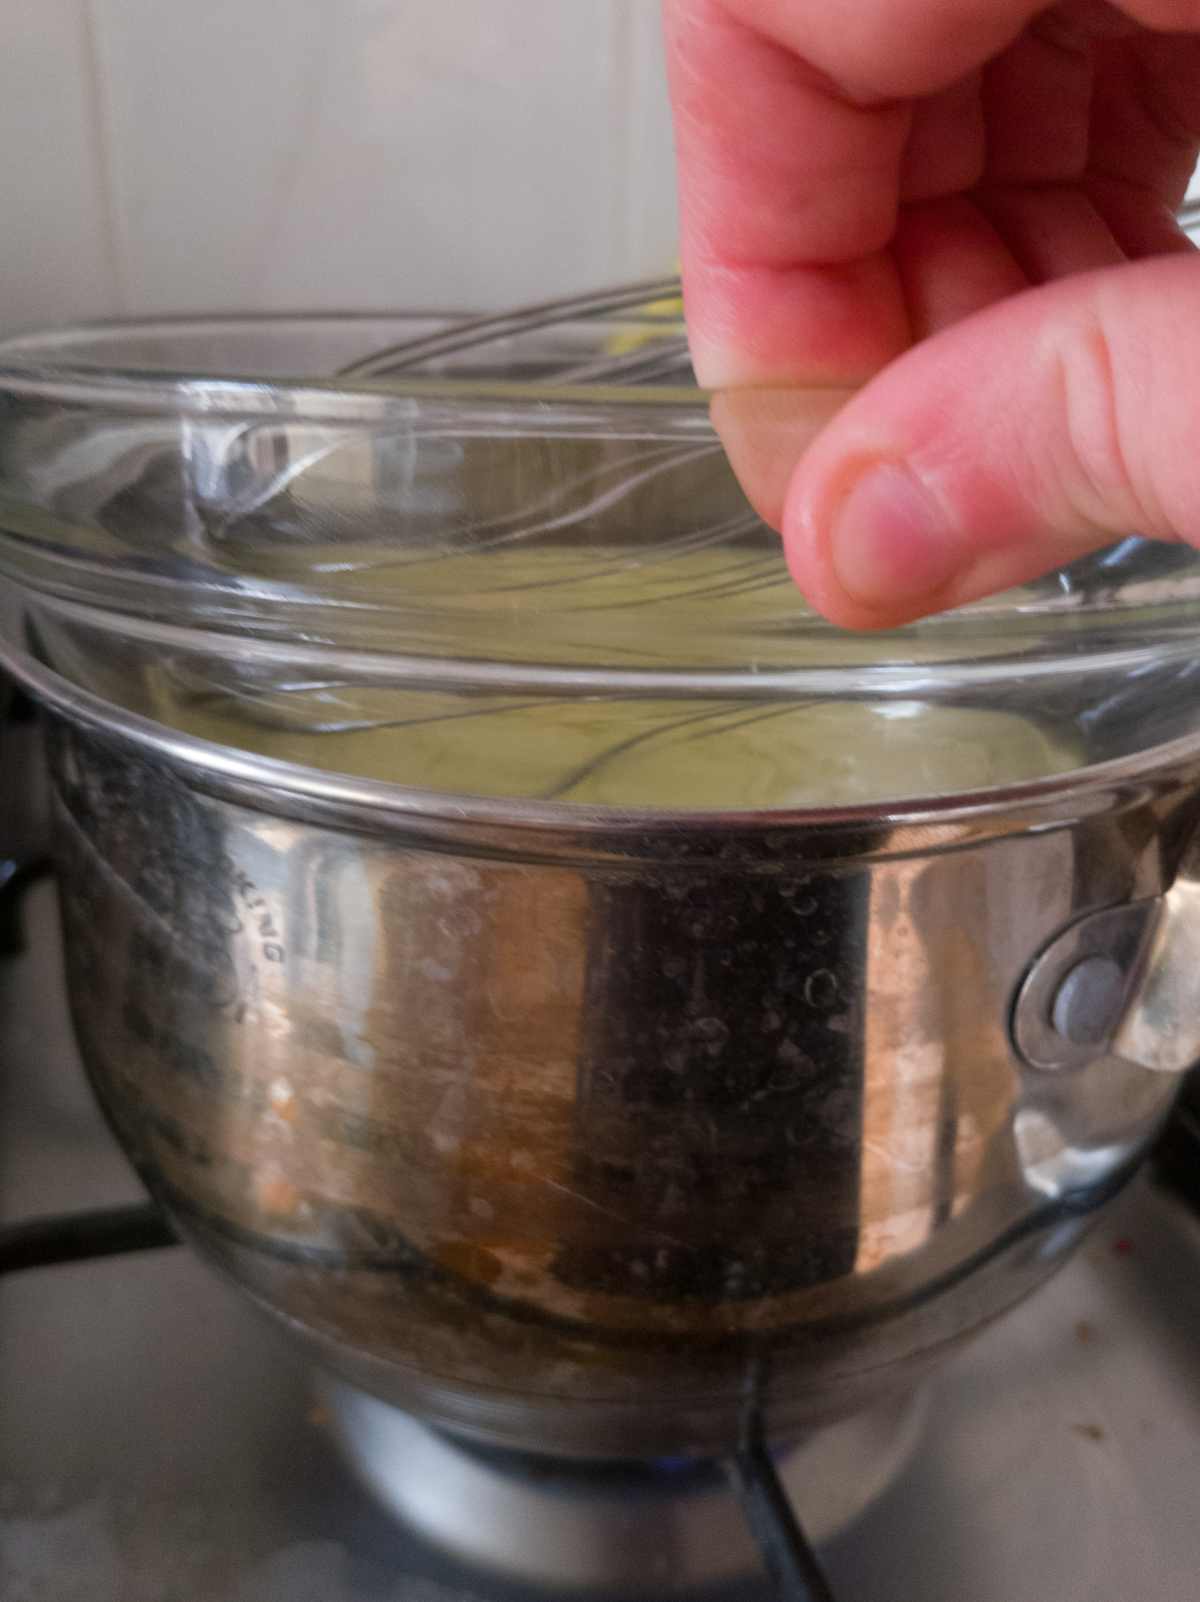 Placing the glass bowl with egg whites over a metal saucepan on the stove.